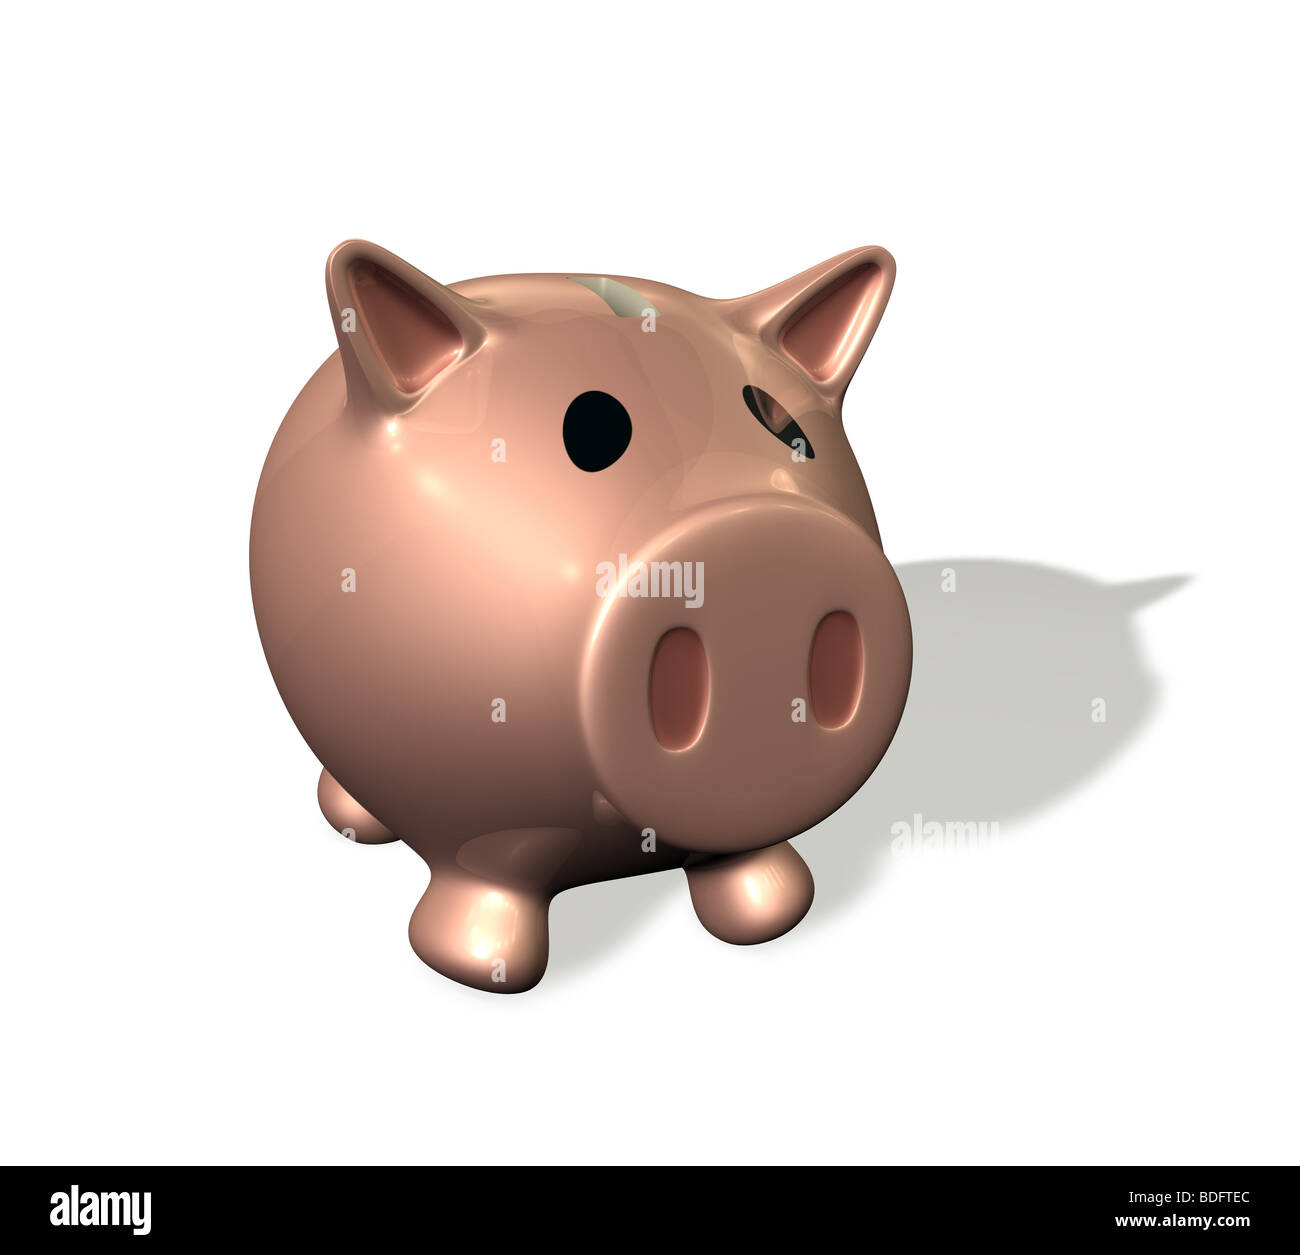 3d rendered illustration of a cute cartoon piggybank Stock Photo